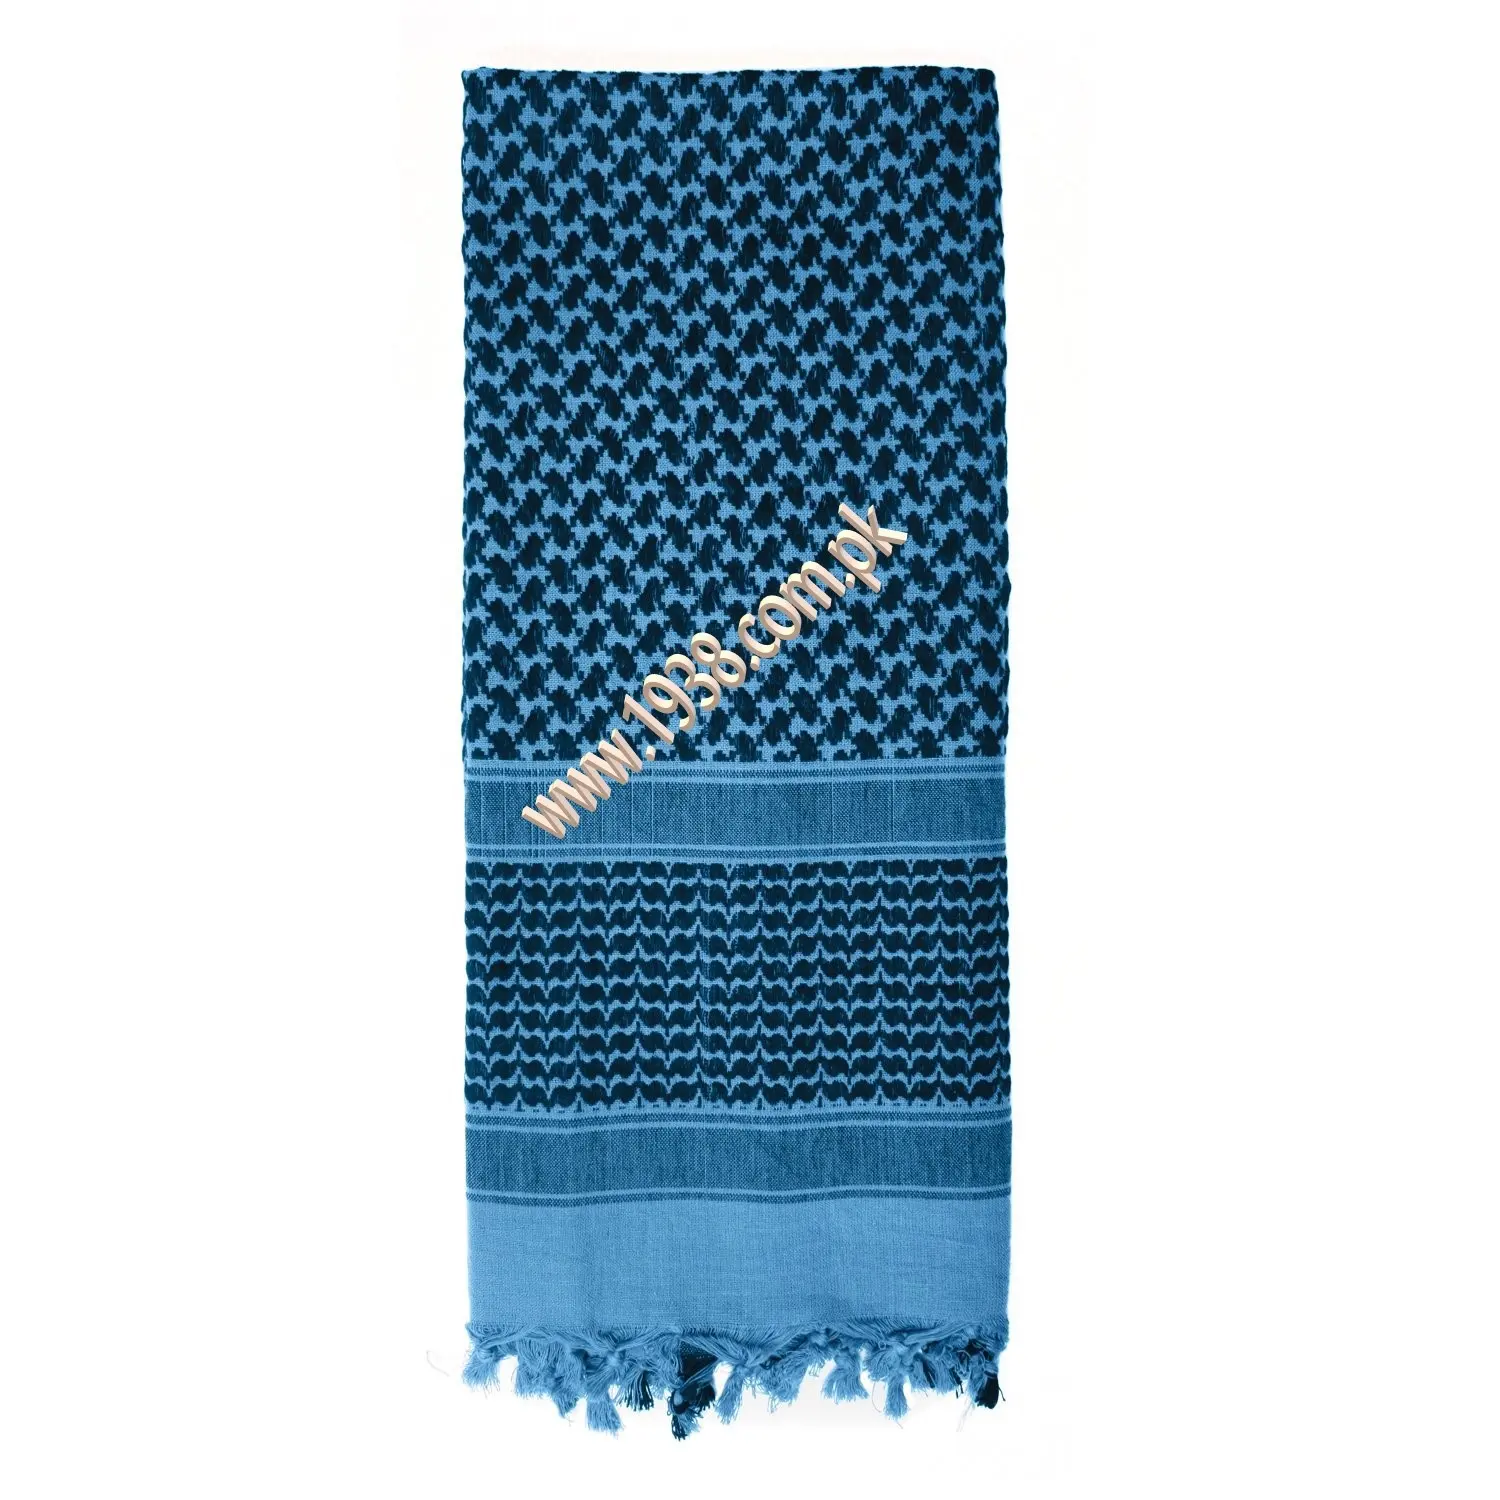 Copricapo in cotone Shemagh da uomo Arab Desert Outdoor traspirante kefiah foulard avvolgente